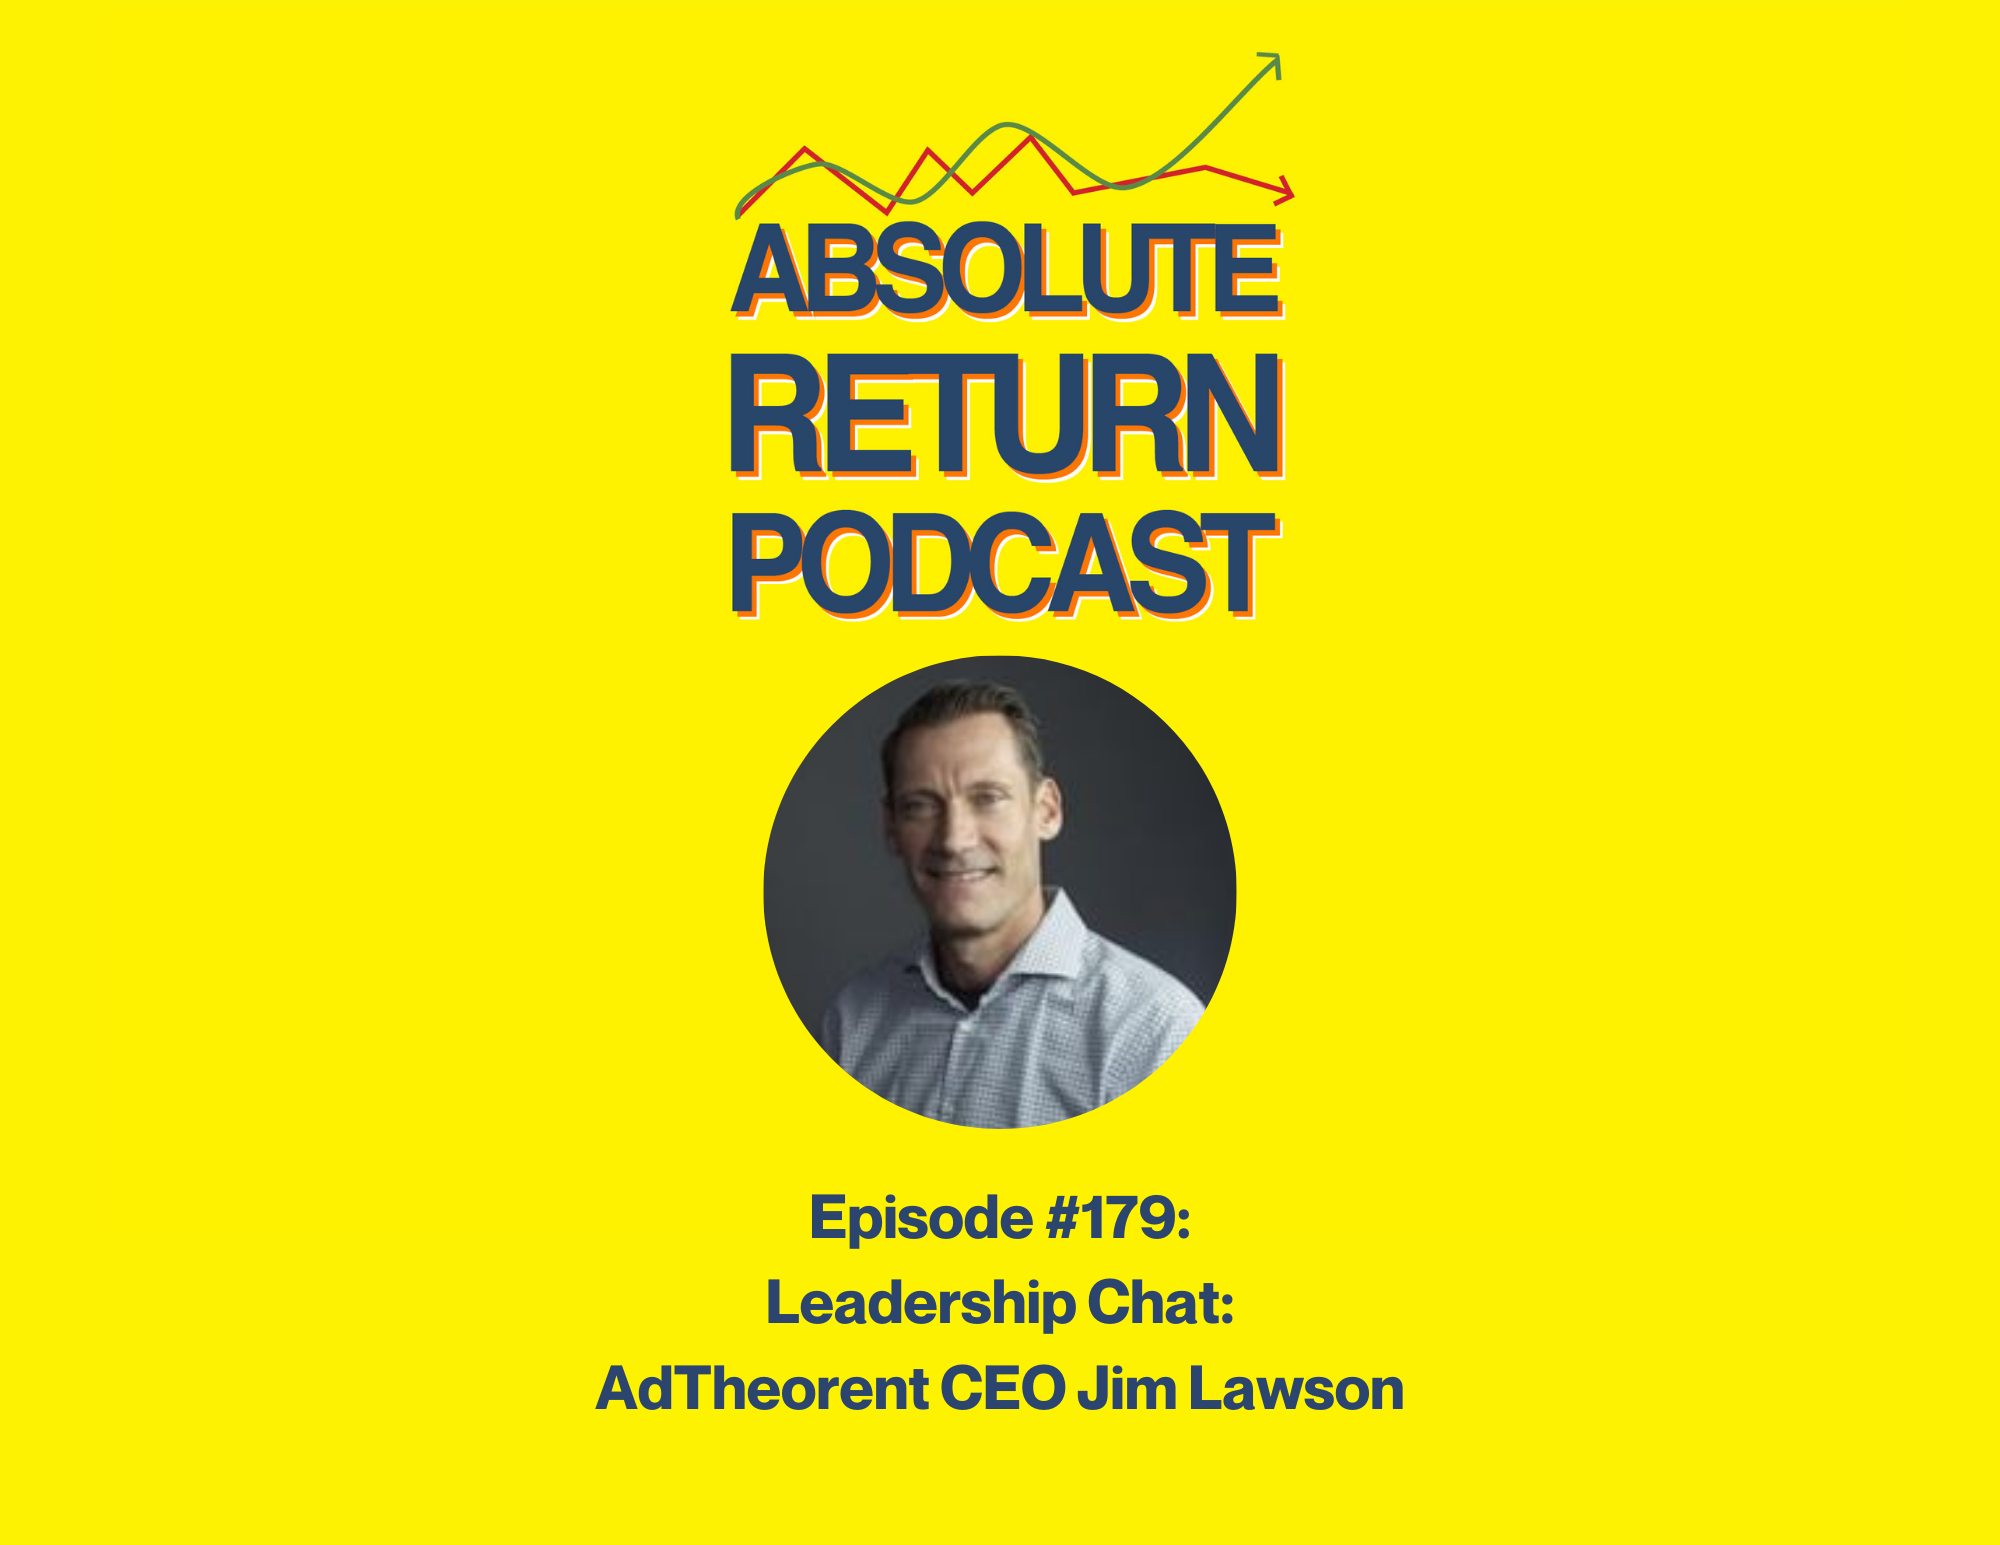 Absolute Return Podcast #179: AdTheorent CEO Jim Lawson